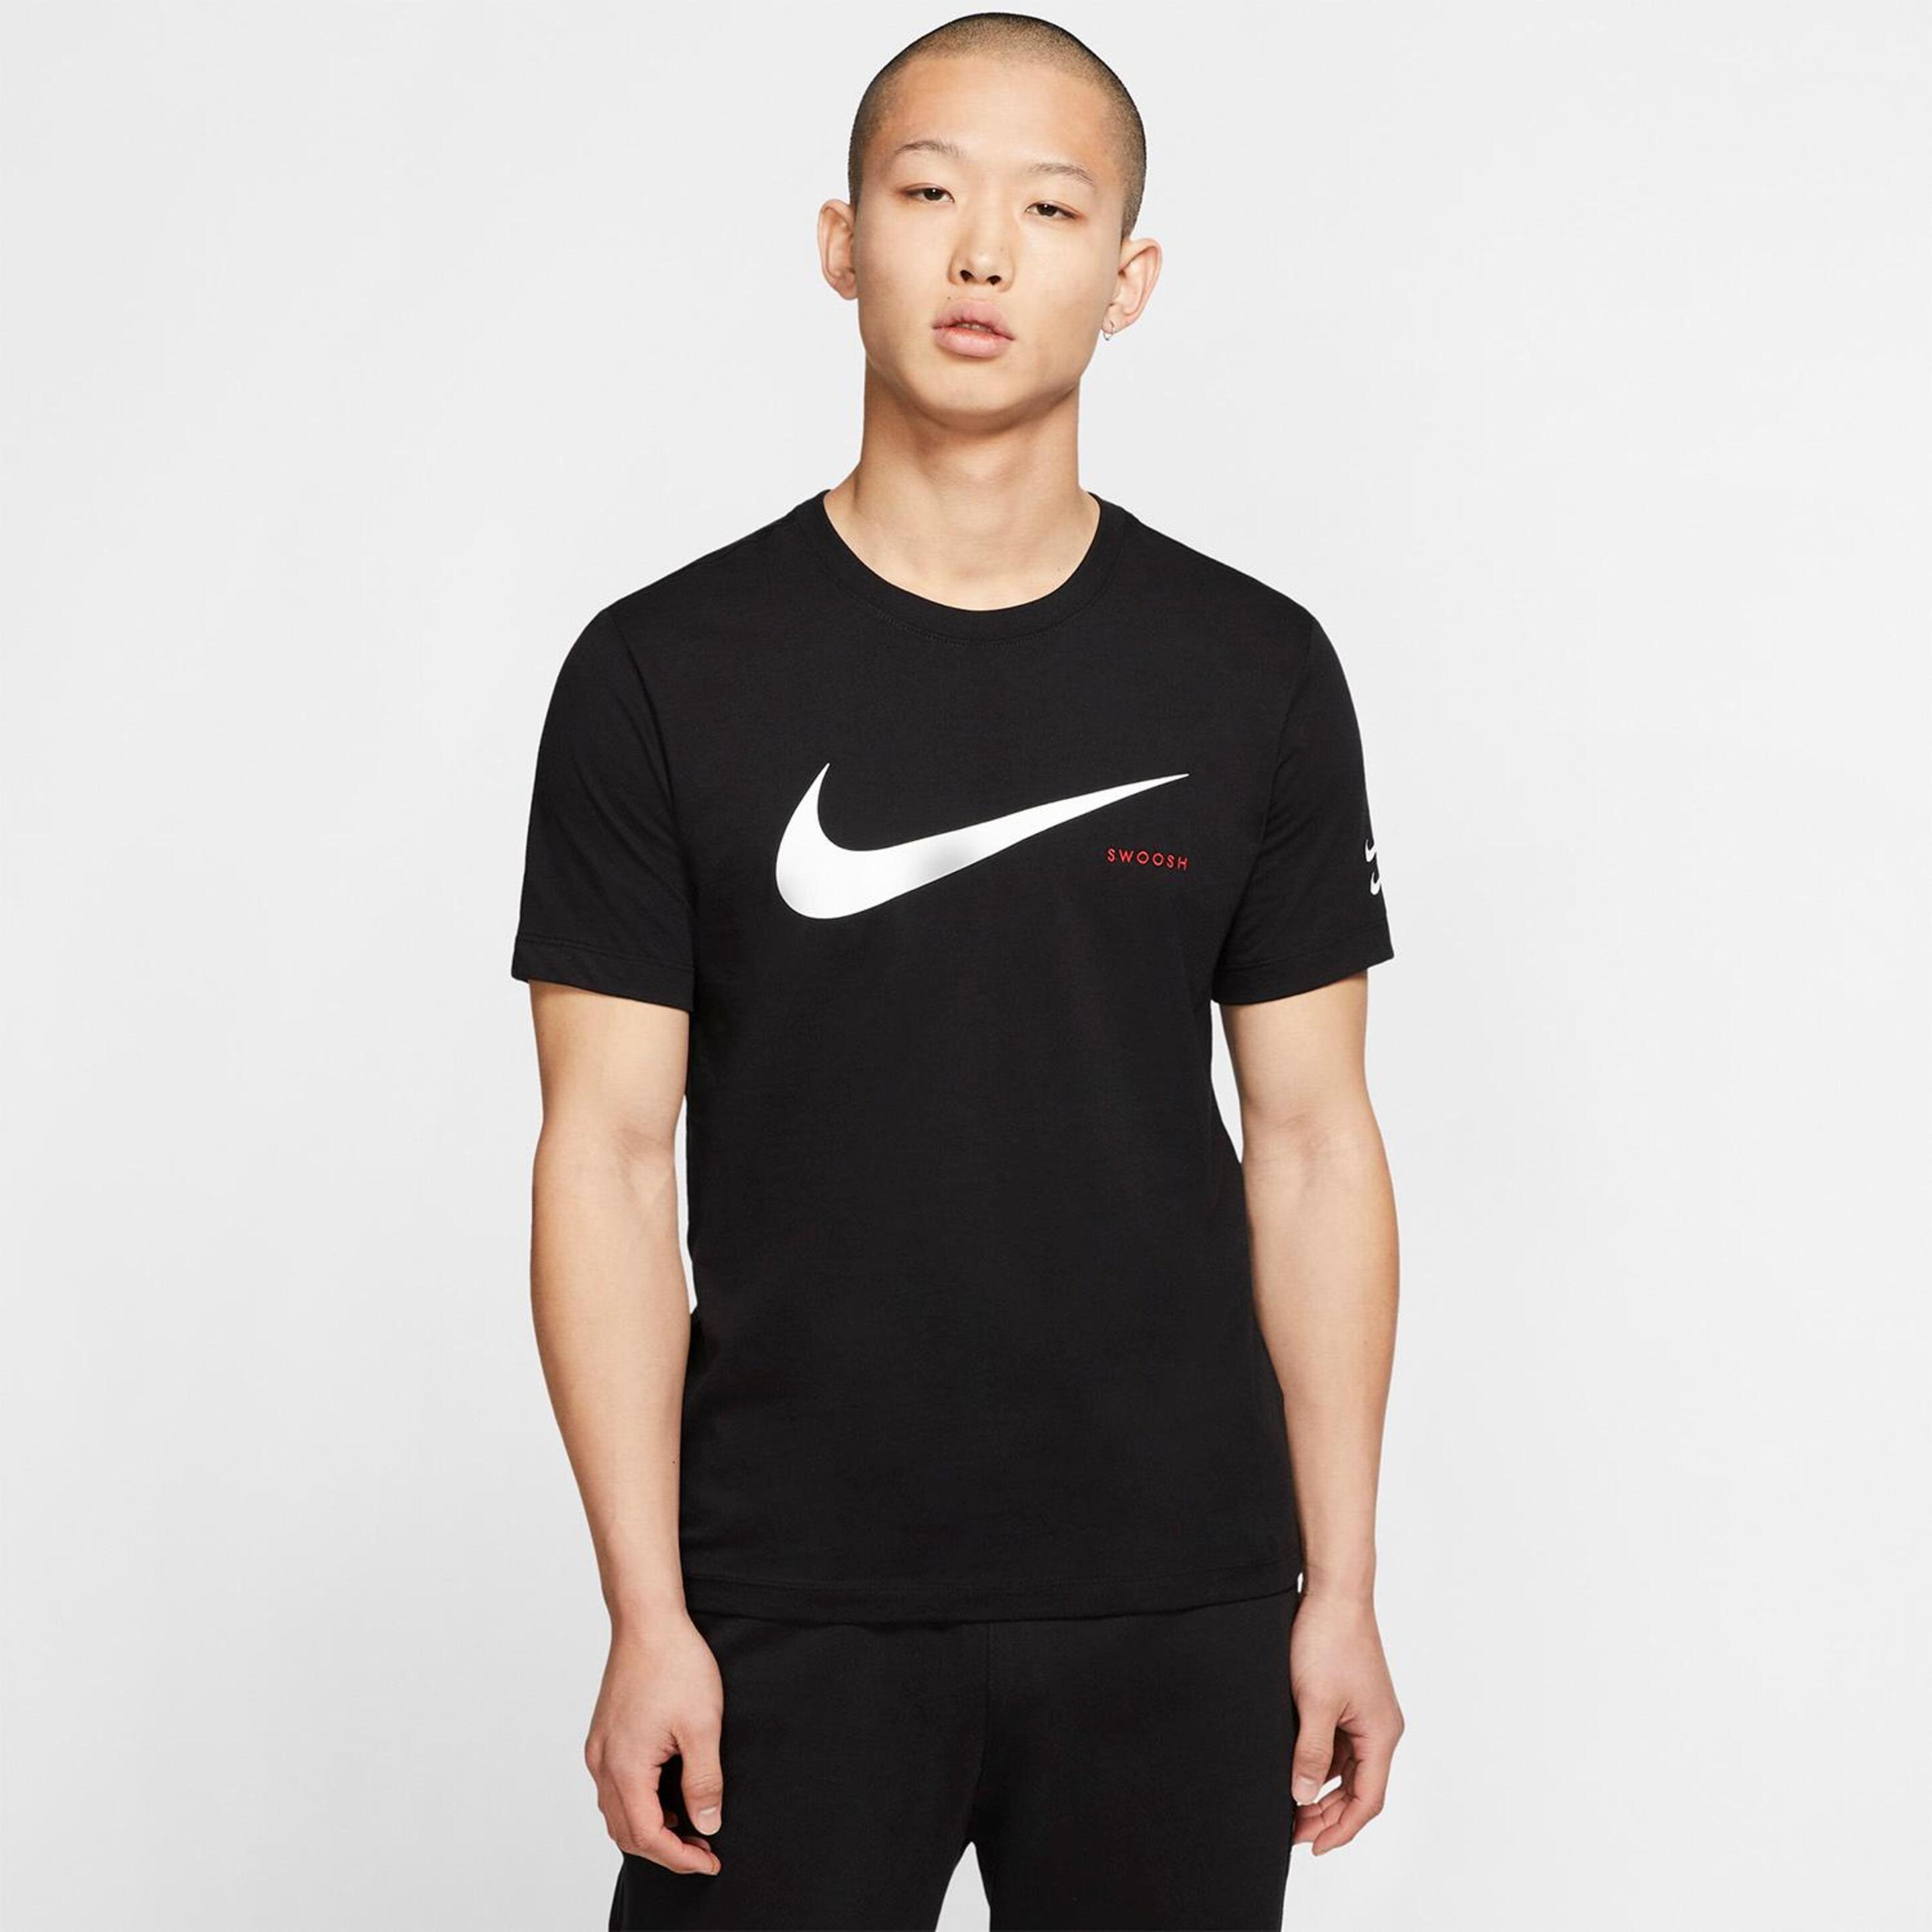 T-shirt Nike Swoosh3